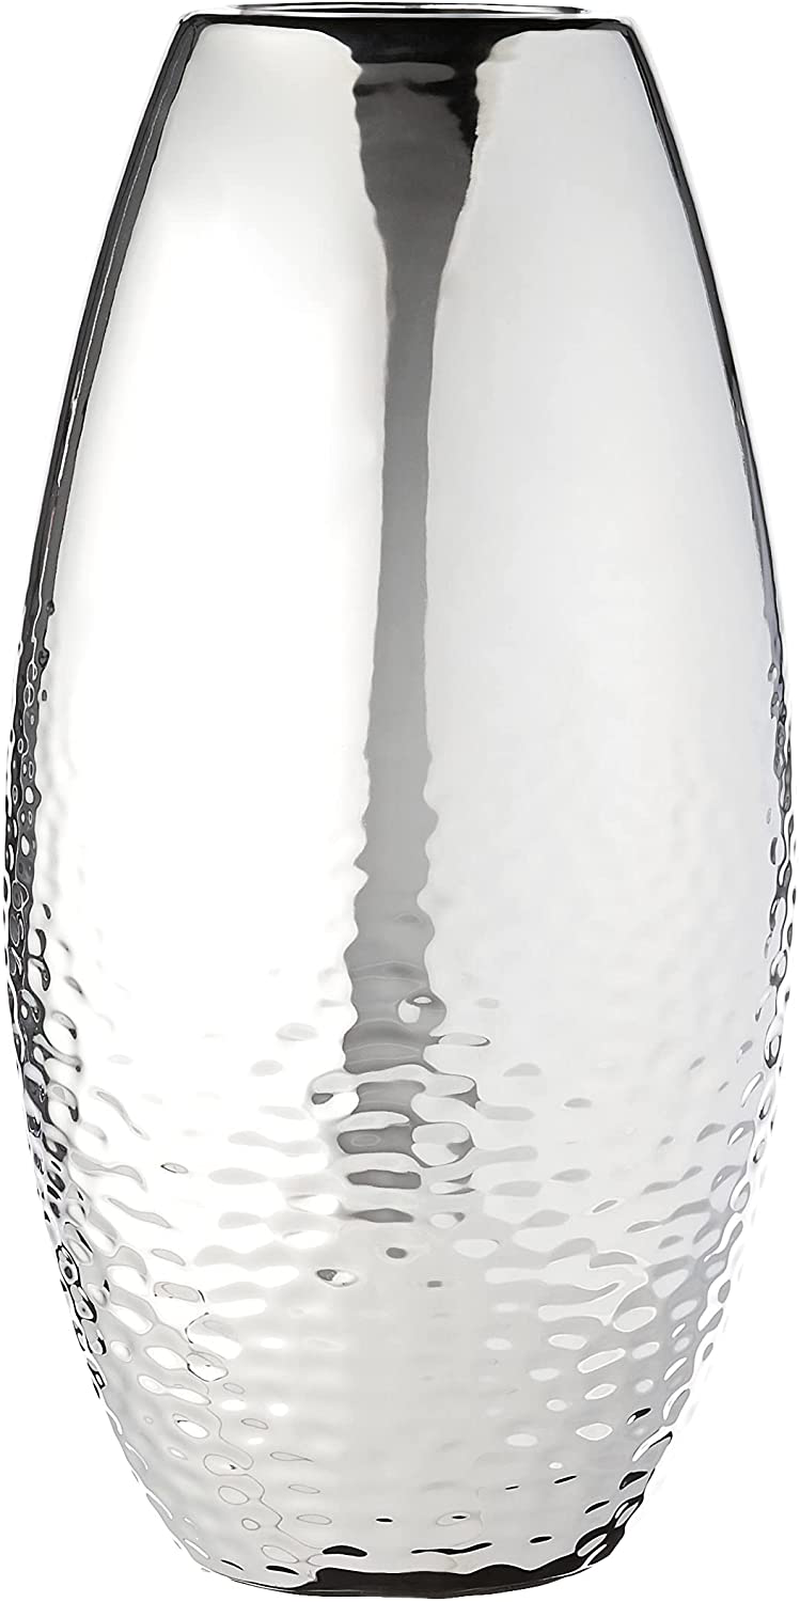 Signature Design by Ashley Dinesh Modern Glam 2 Piece Decorative Vase Set, Silver Finish